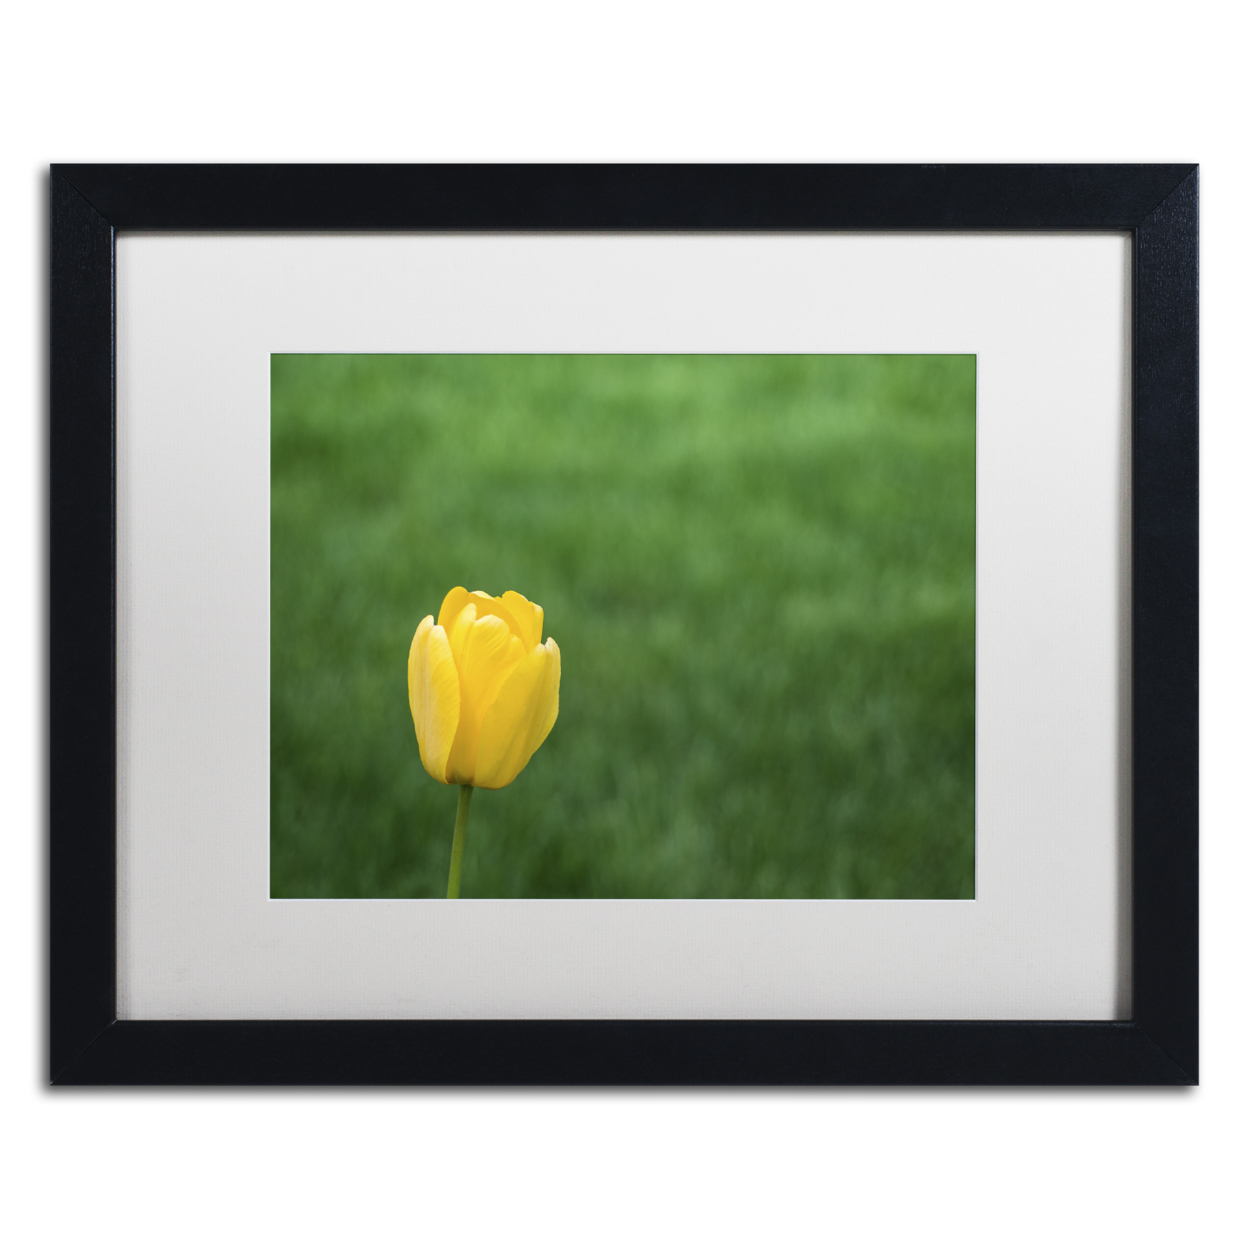 Kurt Shaffer 'A Lone Yellow Tulip 2' Black Wooden Framed Art 18 X 22 Inches